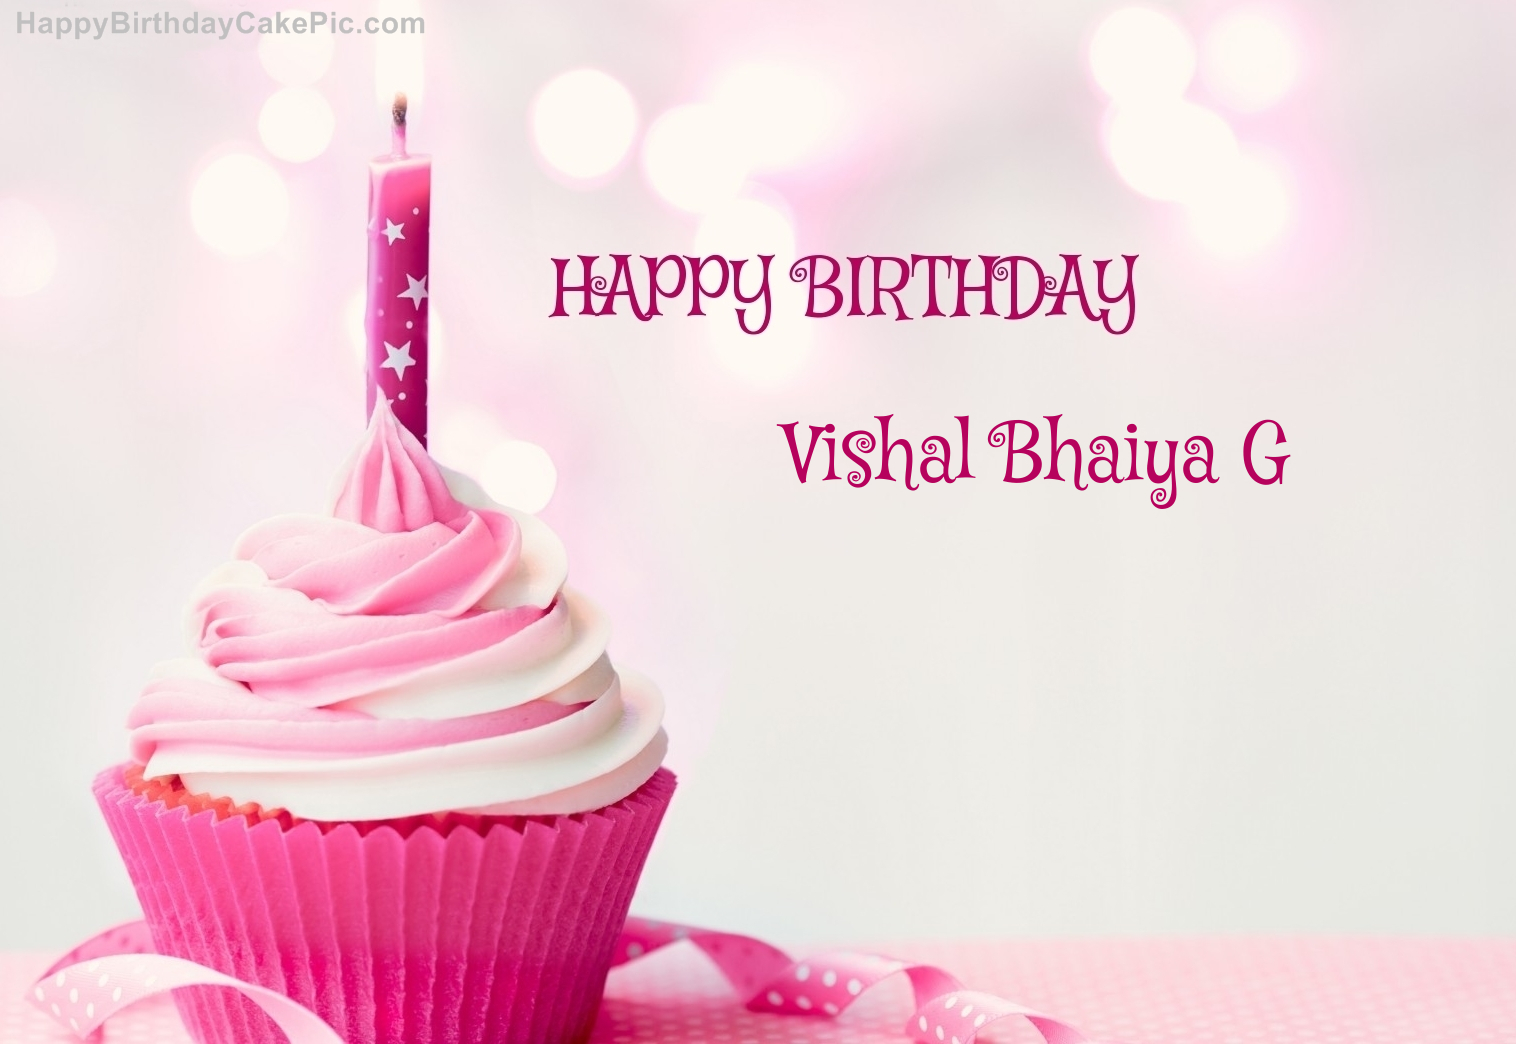 ️ Happy Birthday Cupcake Candle Pink Cake For Vishal Bhaiya G